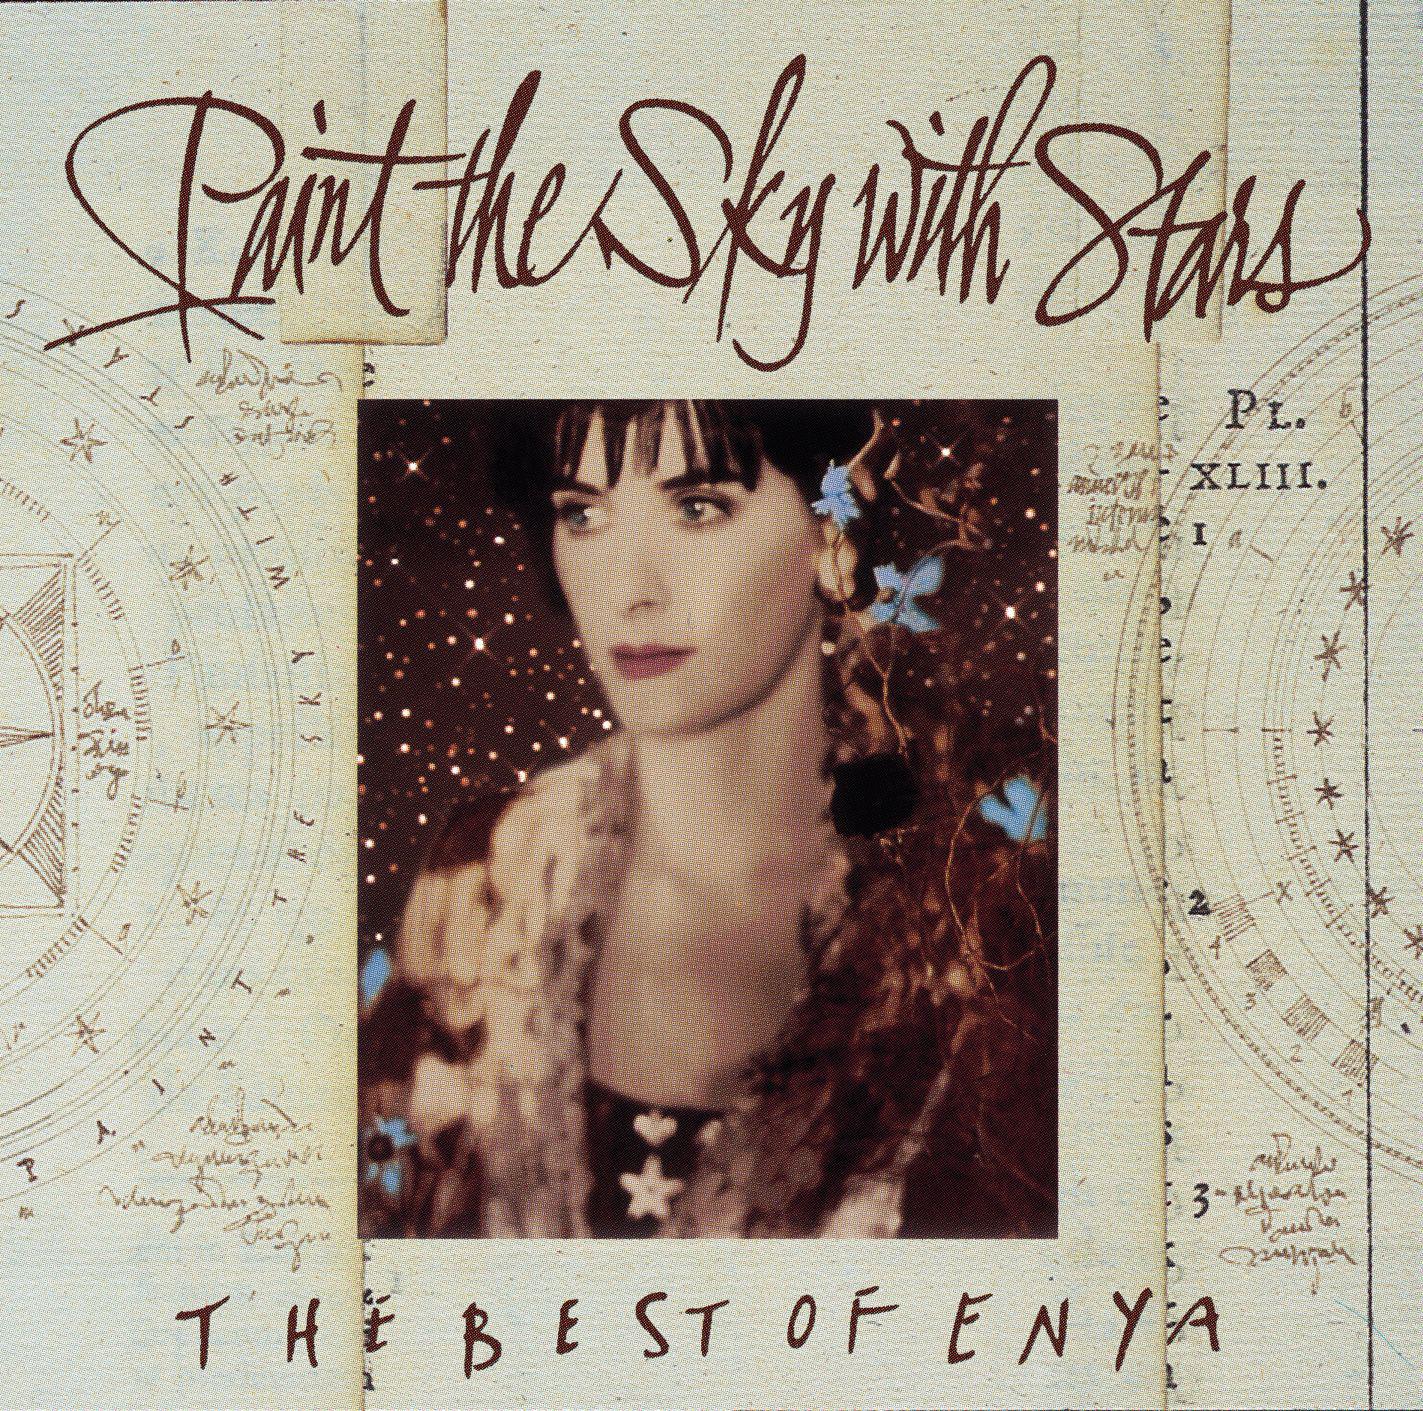 Ebudae歌词 歌手Enya-专辑Paint the Sky with Stars-单曲《Ebudae》LRC歌词下载